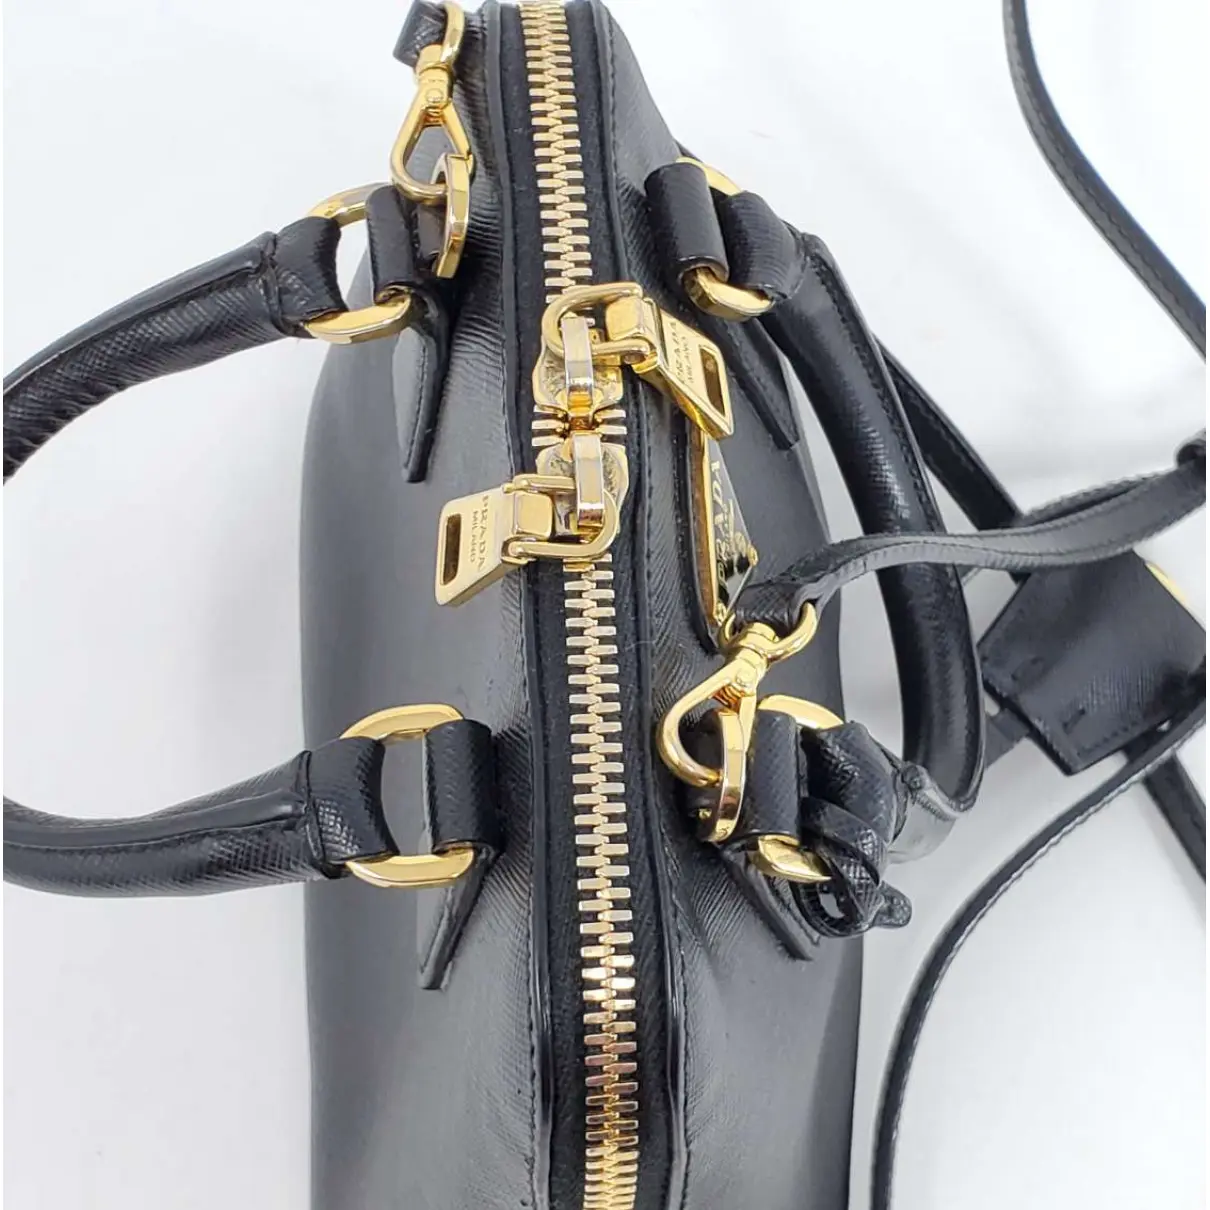 Buy Prada Promenade leather handbag online